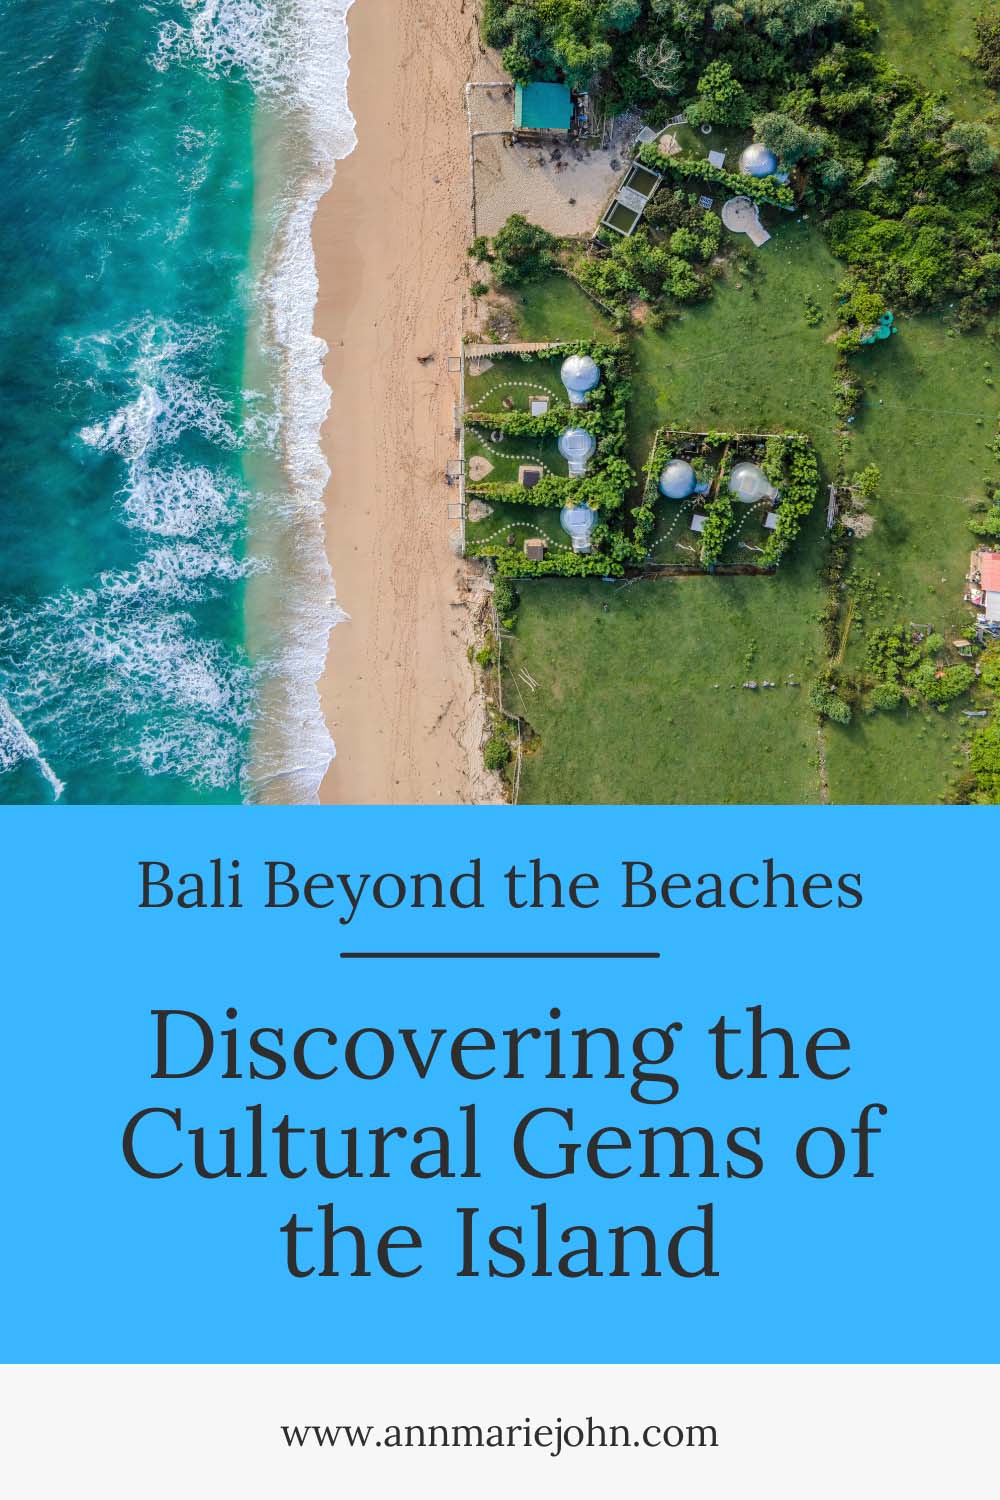 Bali Beyond the Beaches